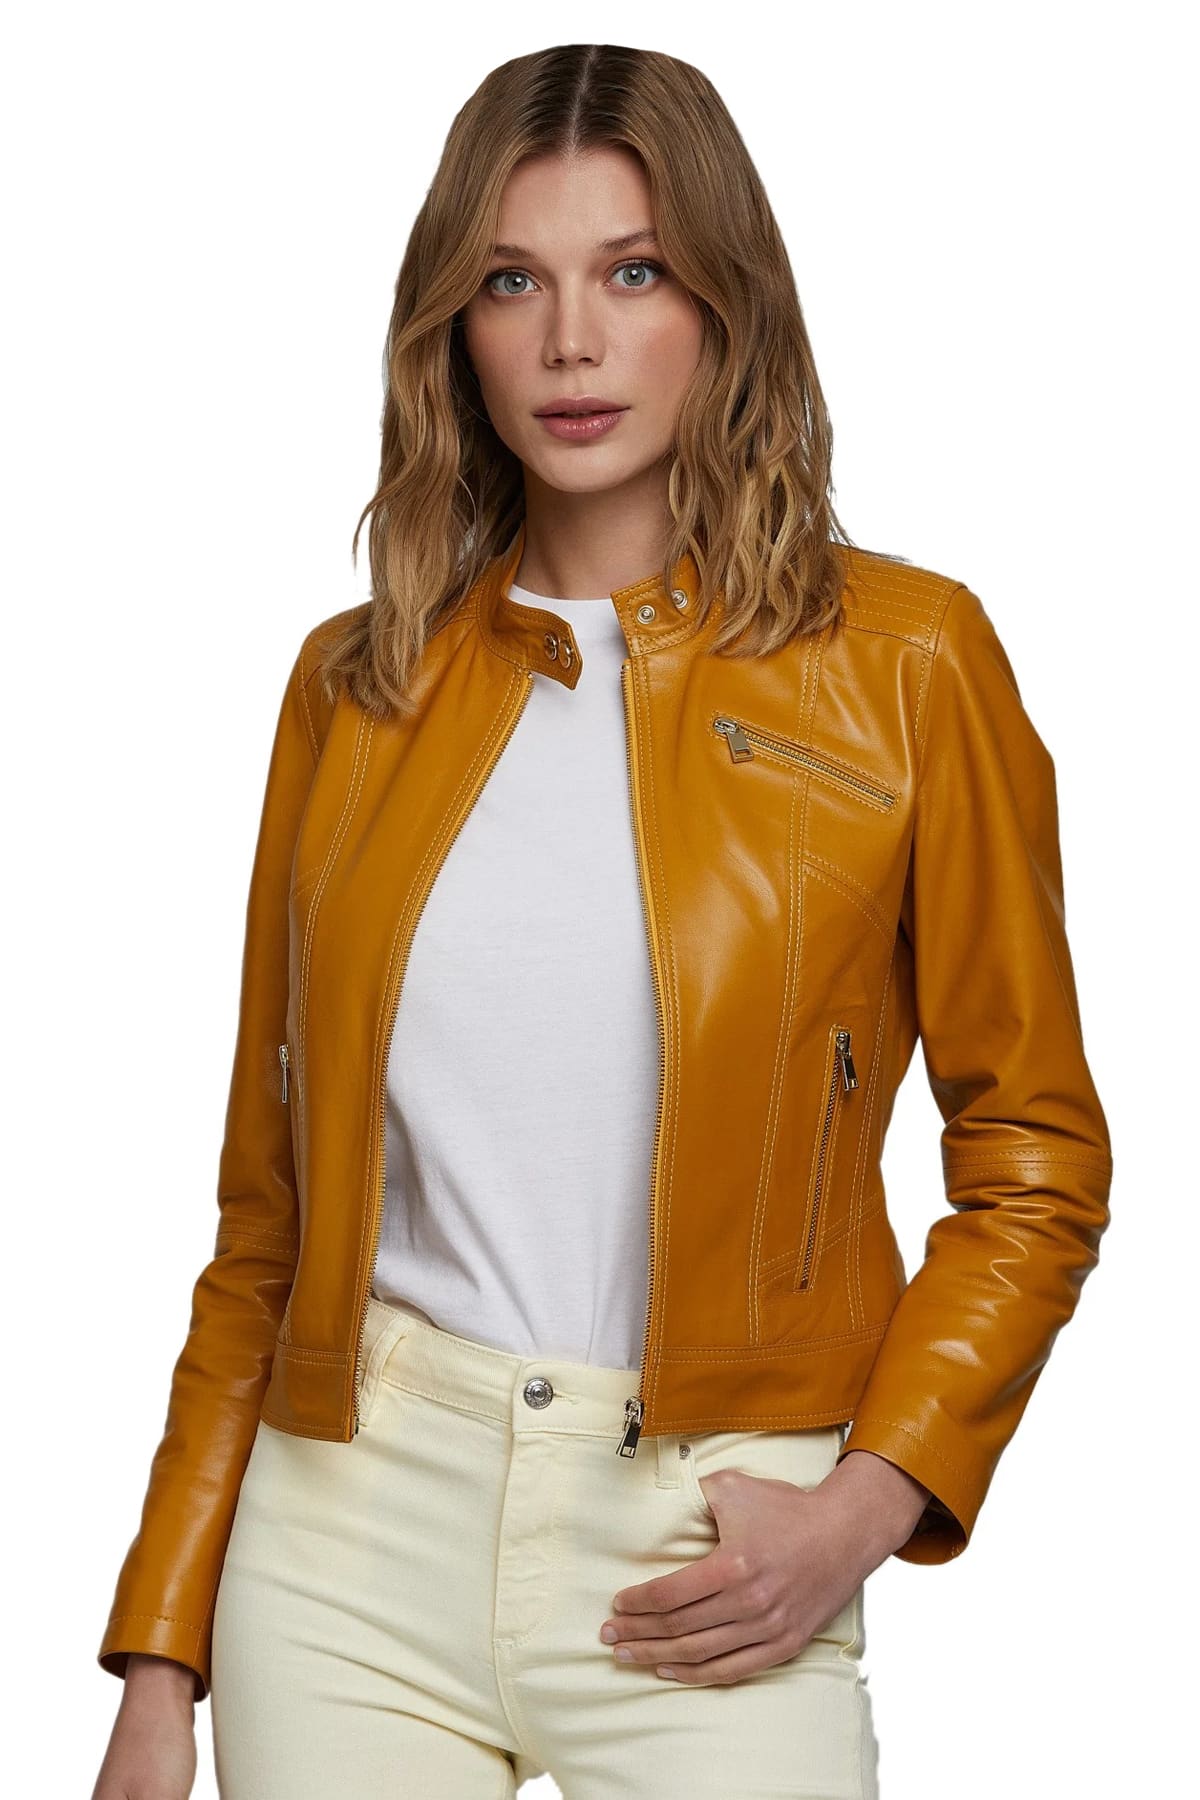 Rosie Huntington Biker Style Women's Genuine Leather Jacket